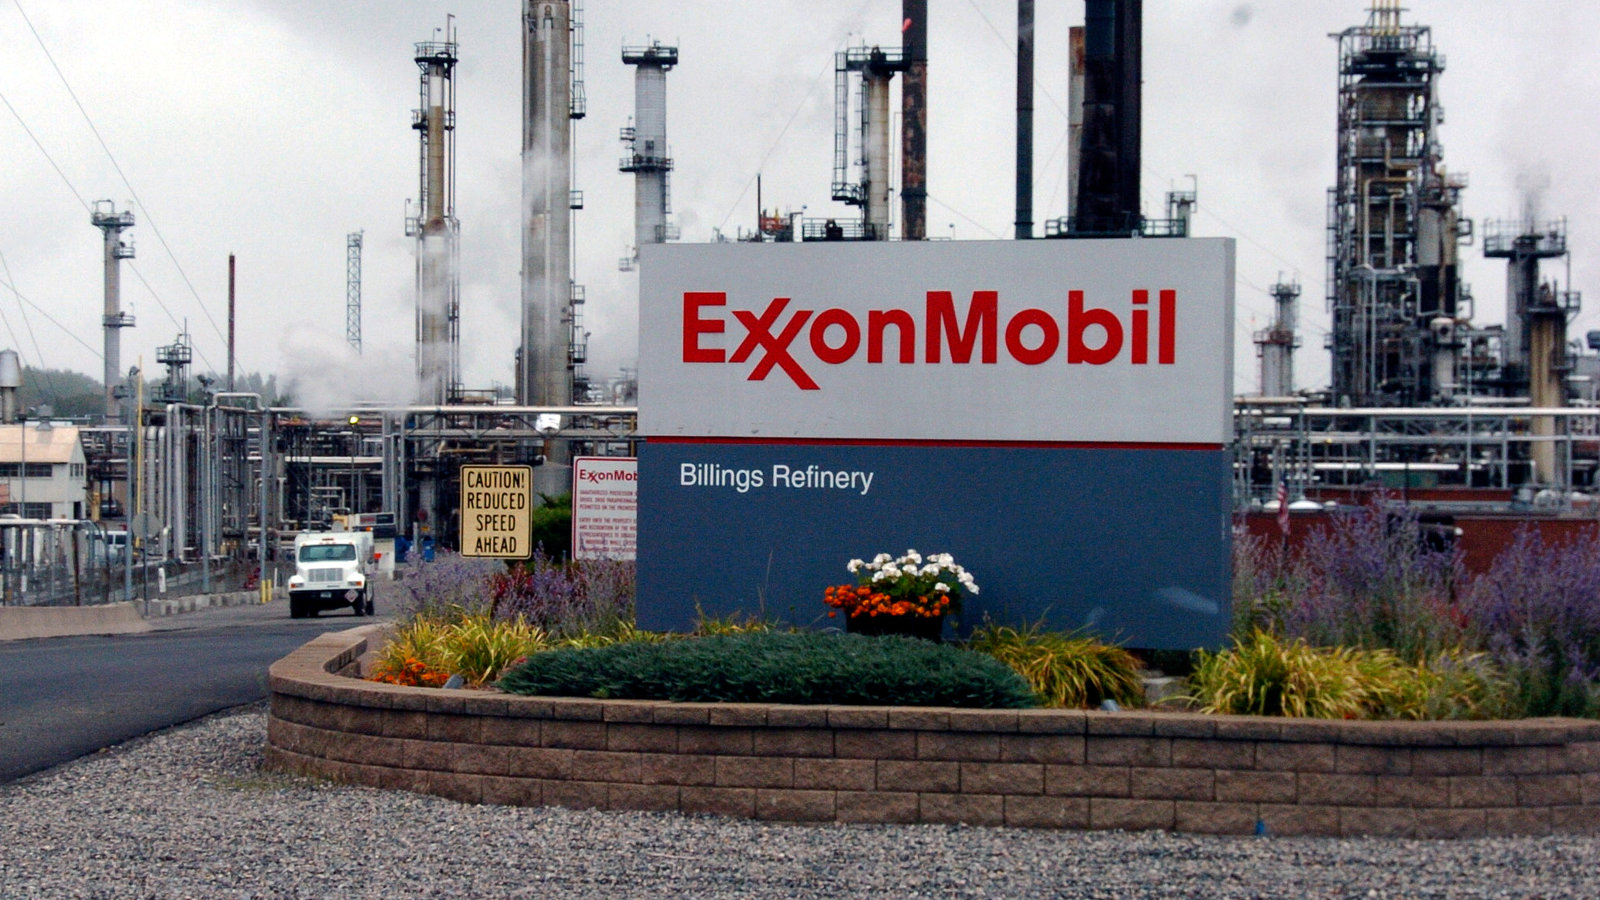 Texas-Based Exxon Mobil Loses US$1 billion due to COVID-19